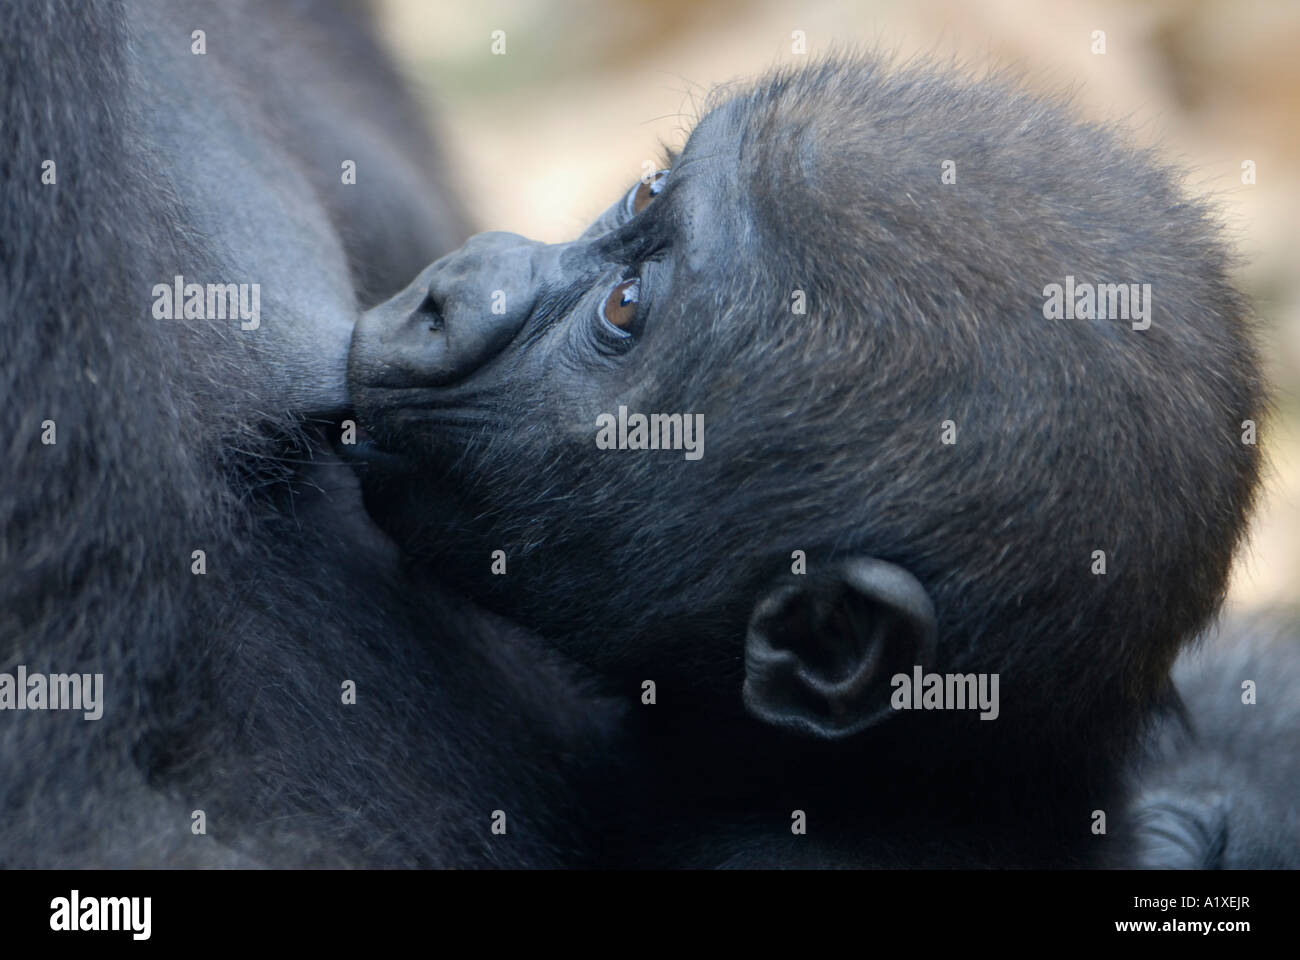 Baby gorilla nursing close up closeup Foto Stock